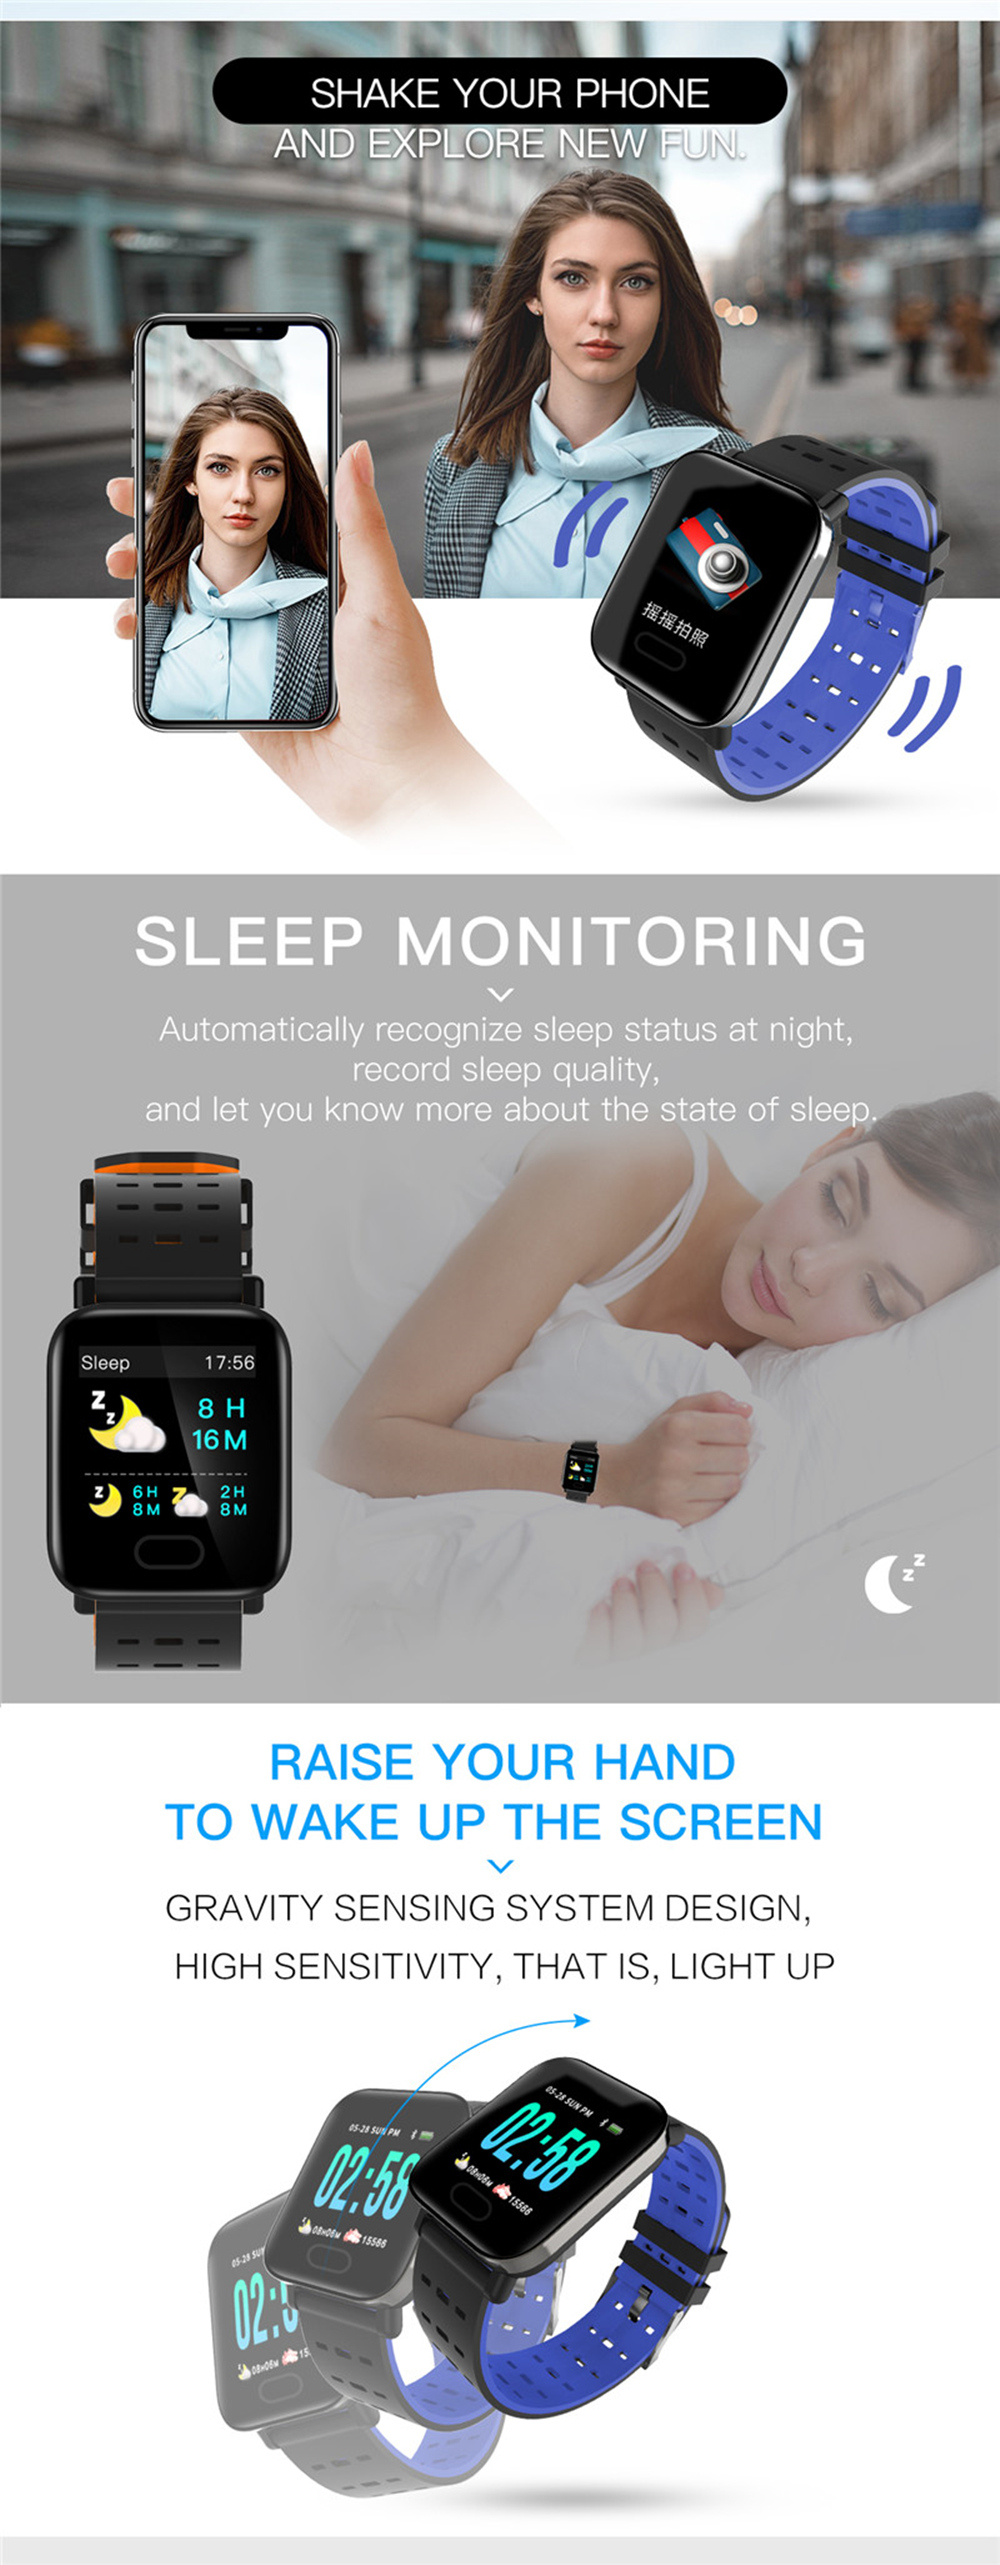 Relógio Smartwatch A6 otenha todas as funcionalidades do seu Smartphone - Android ou Iphone no seu pulso.